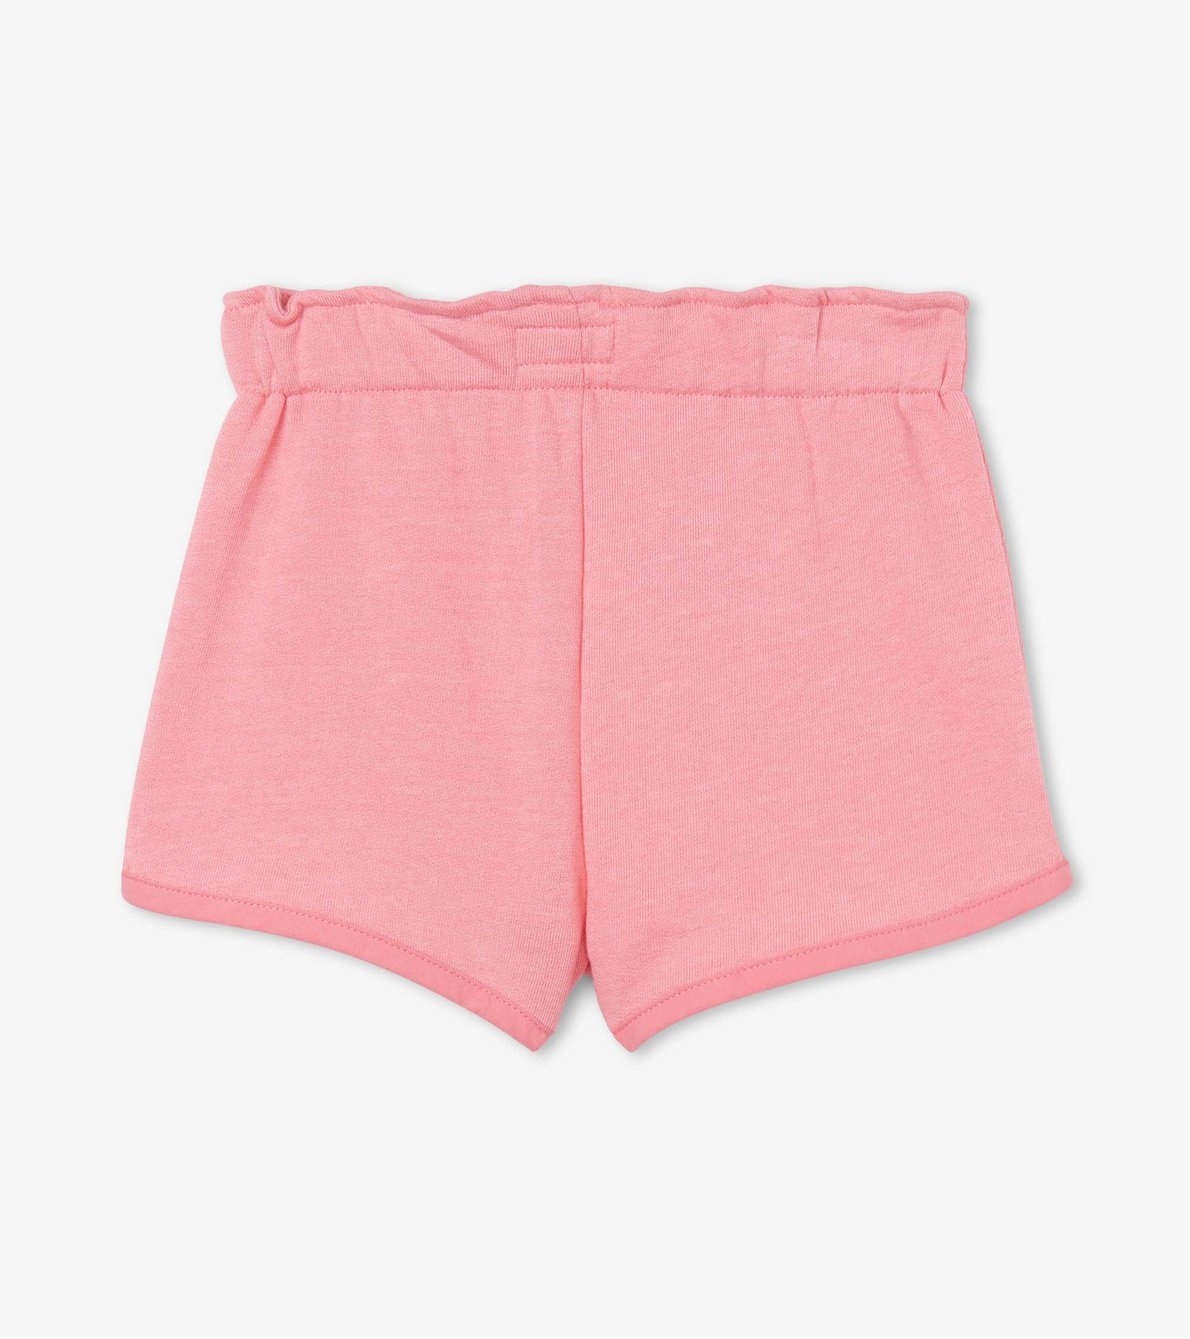 View larger image of Girls Light Pink Paper Bag Shorts